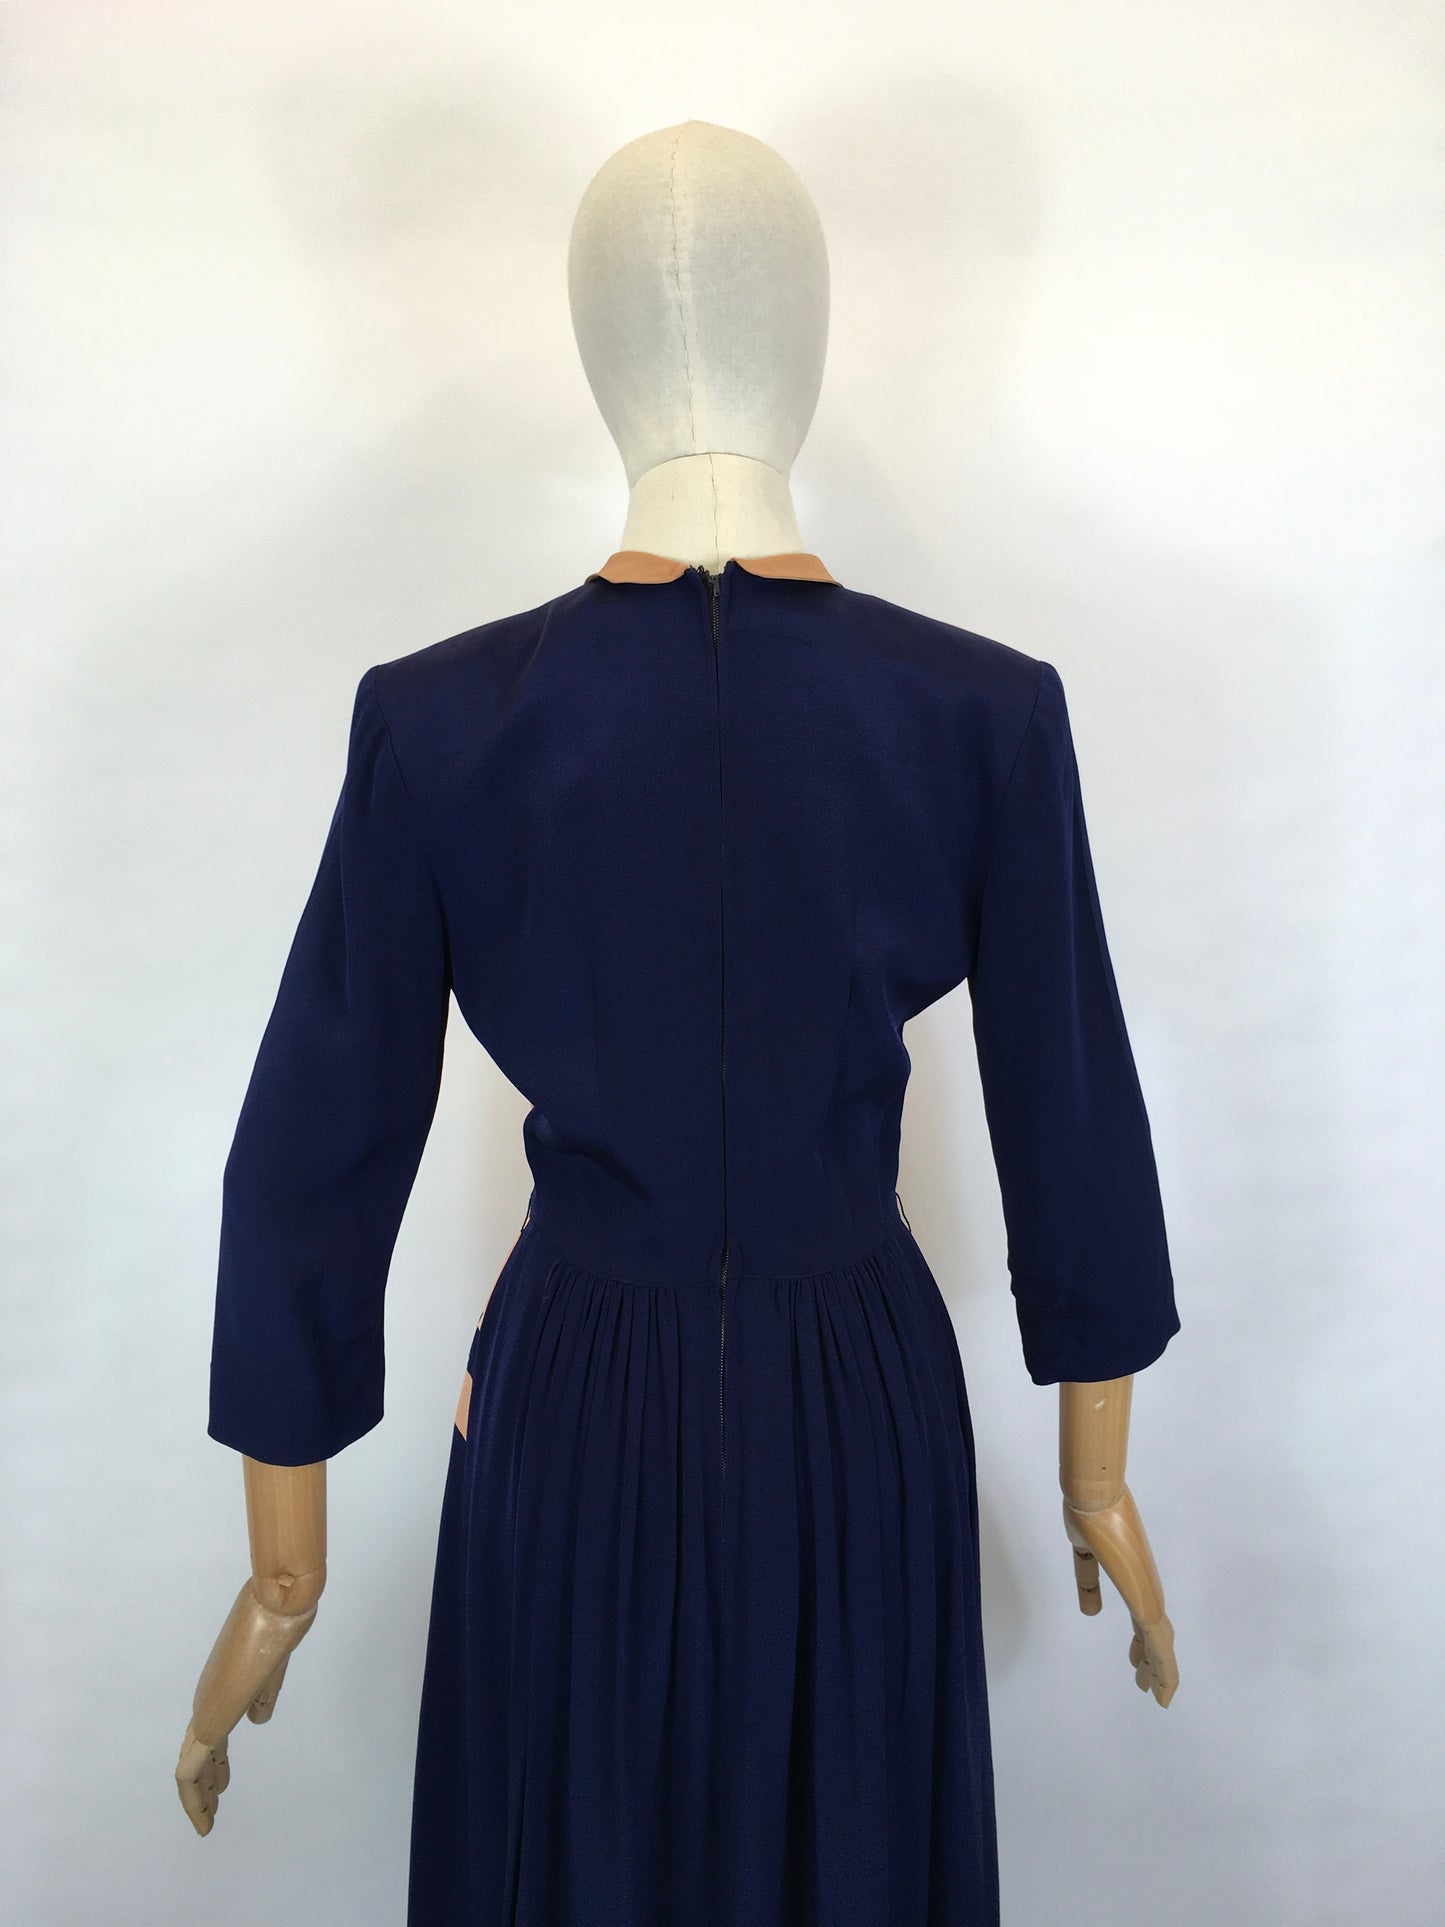 Original 1940’s SENSATIONAL Rayon Crepe Colour Block Dress - In Navy Blue and Soft Cinnamon